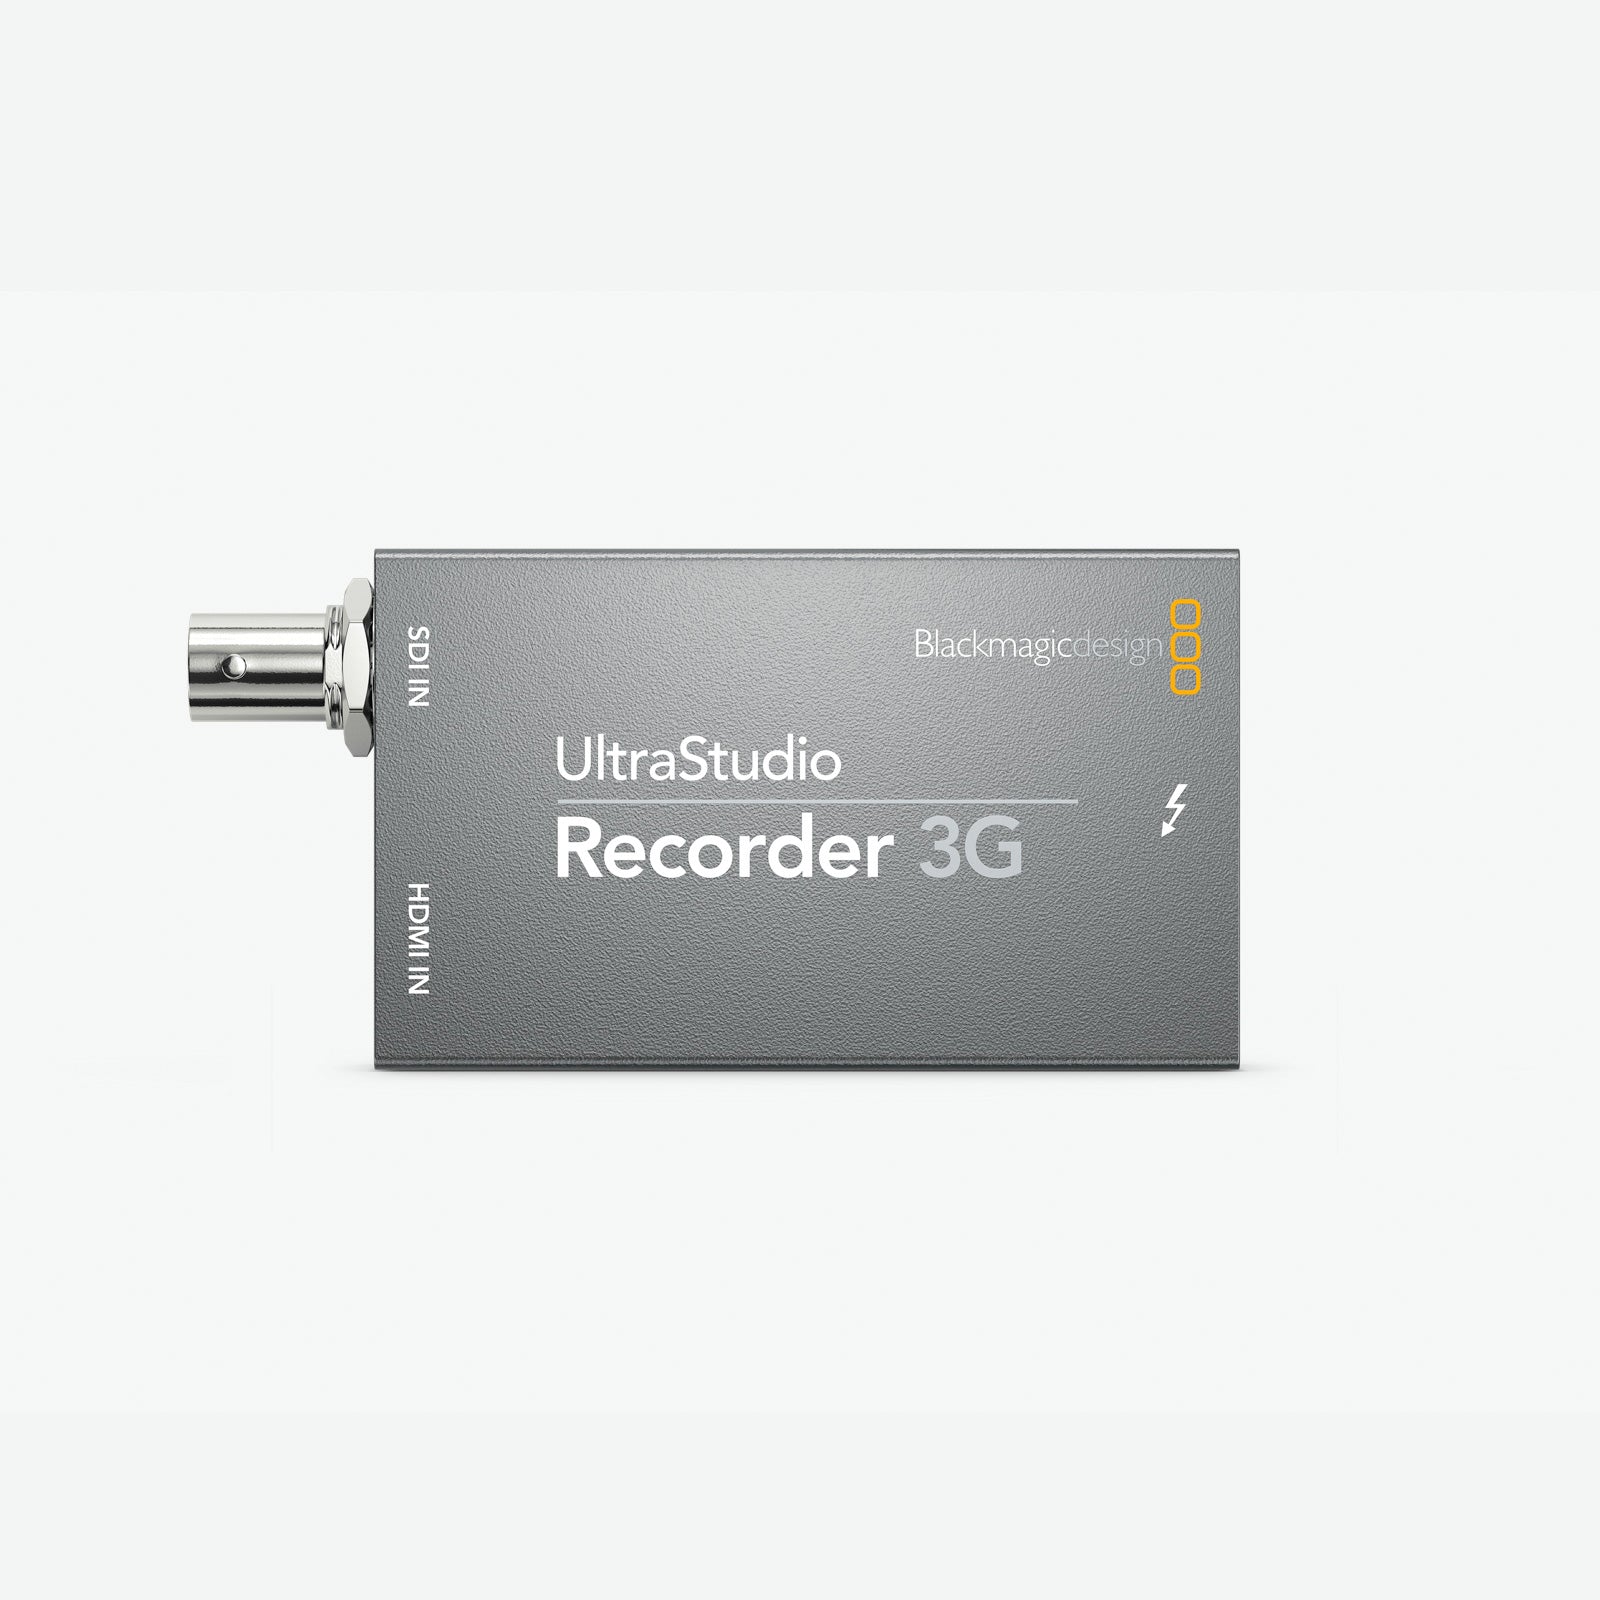 Blackmagic Design(ブラックマジックデザイン) UltraStudio Recorder 3G BDLKULSDMAREC3G